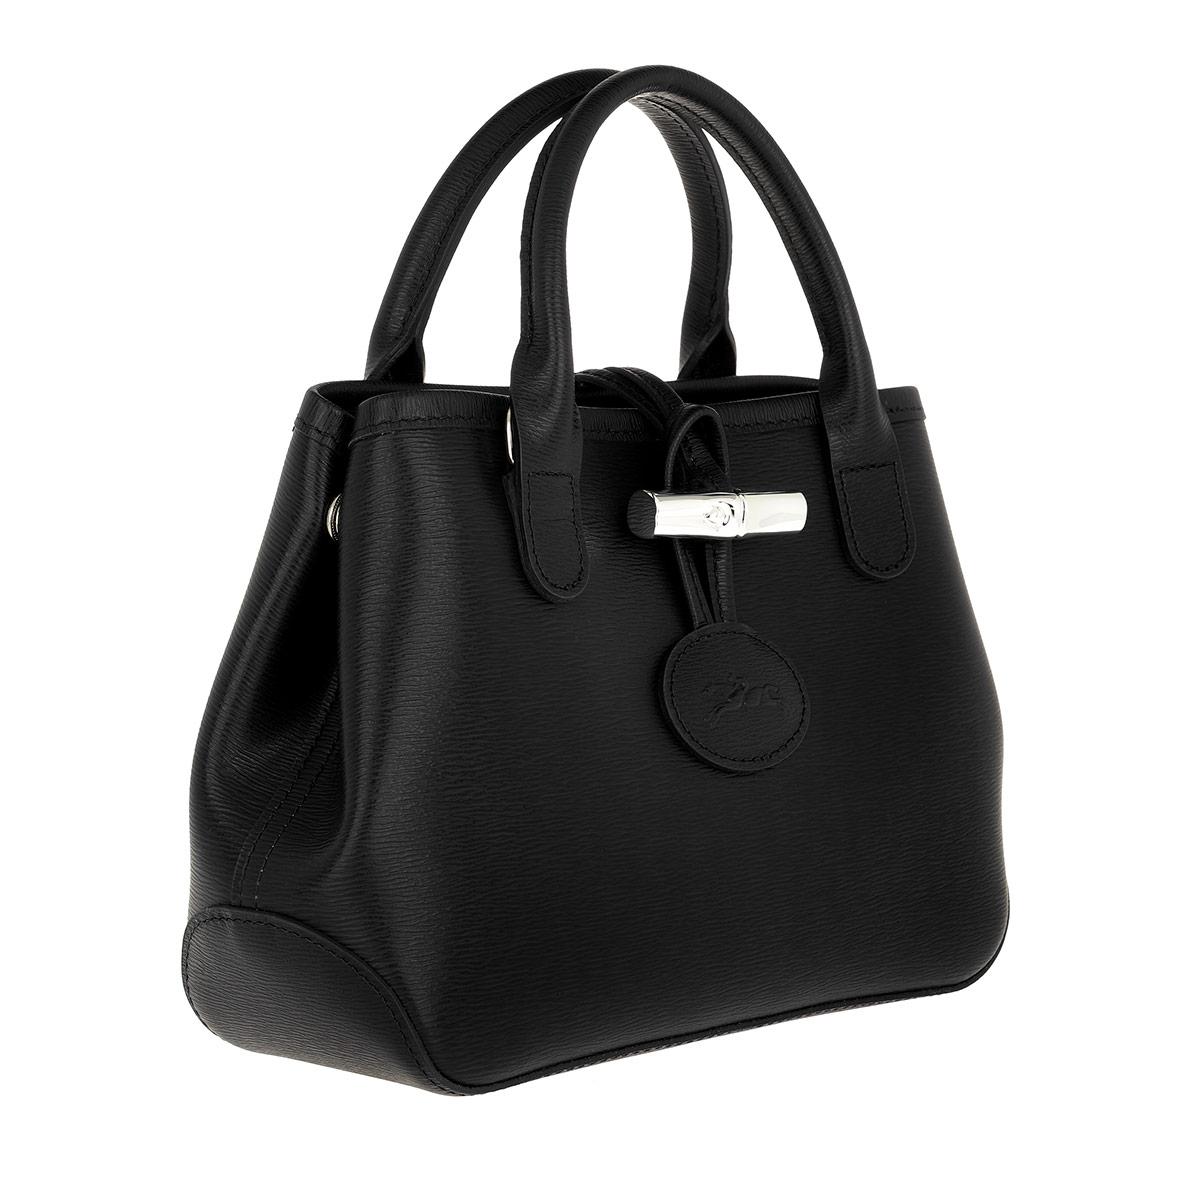 Roseau Crossbody Bag Leather Black